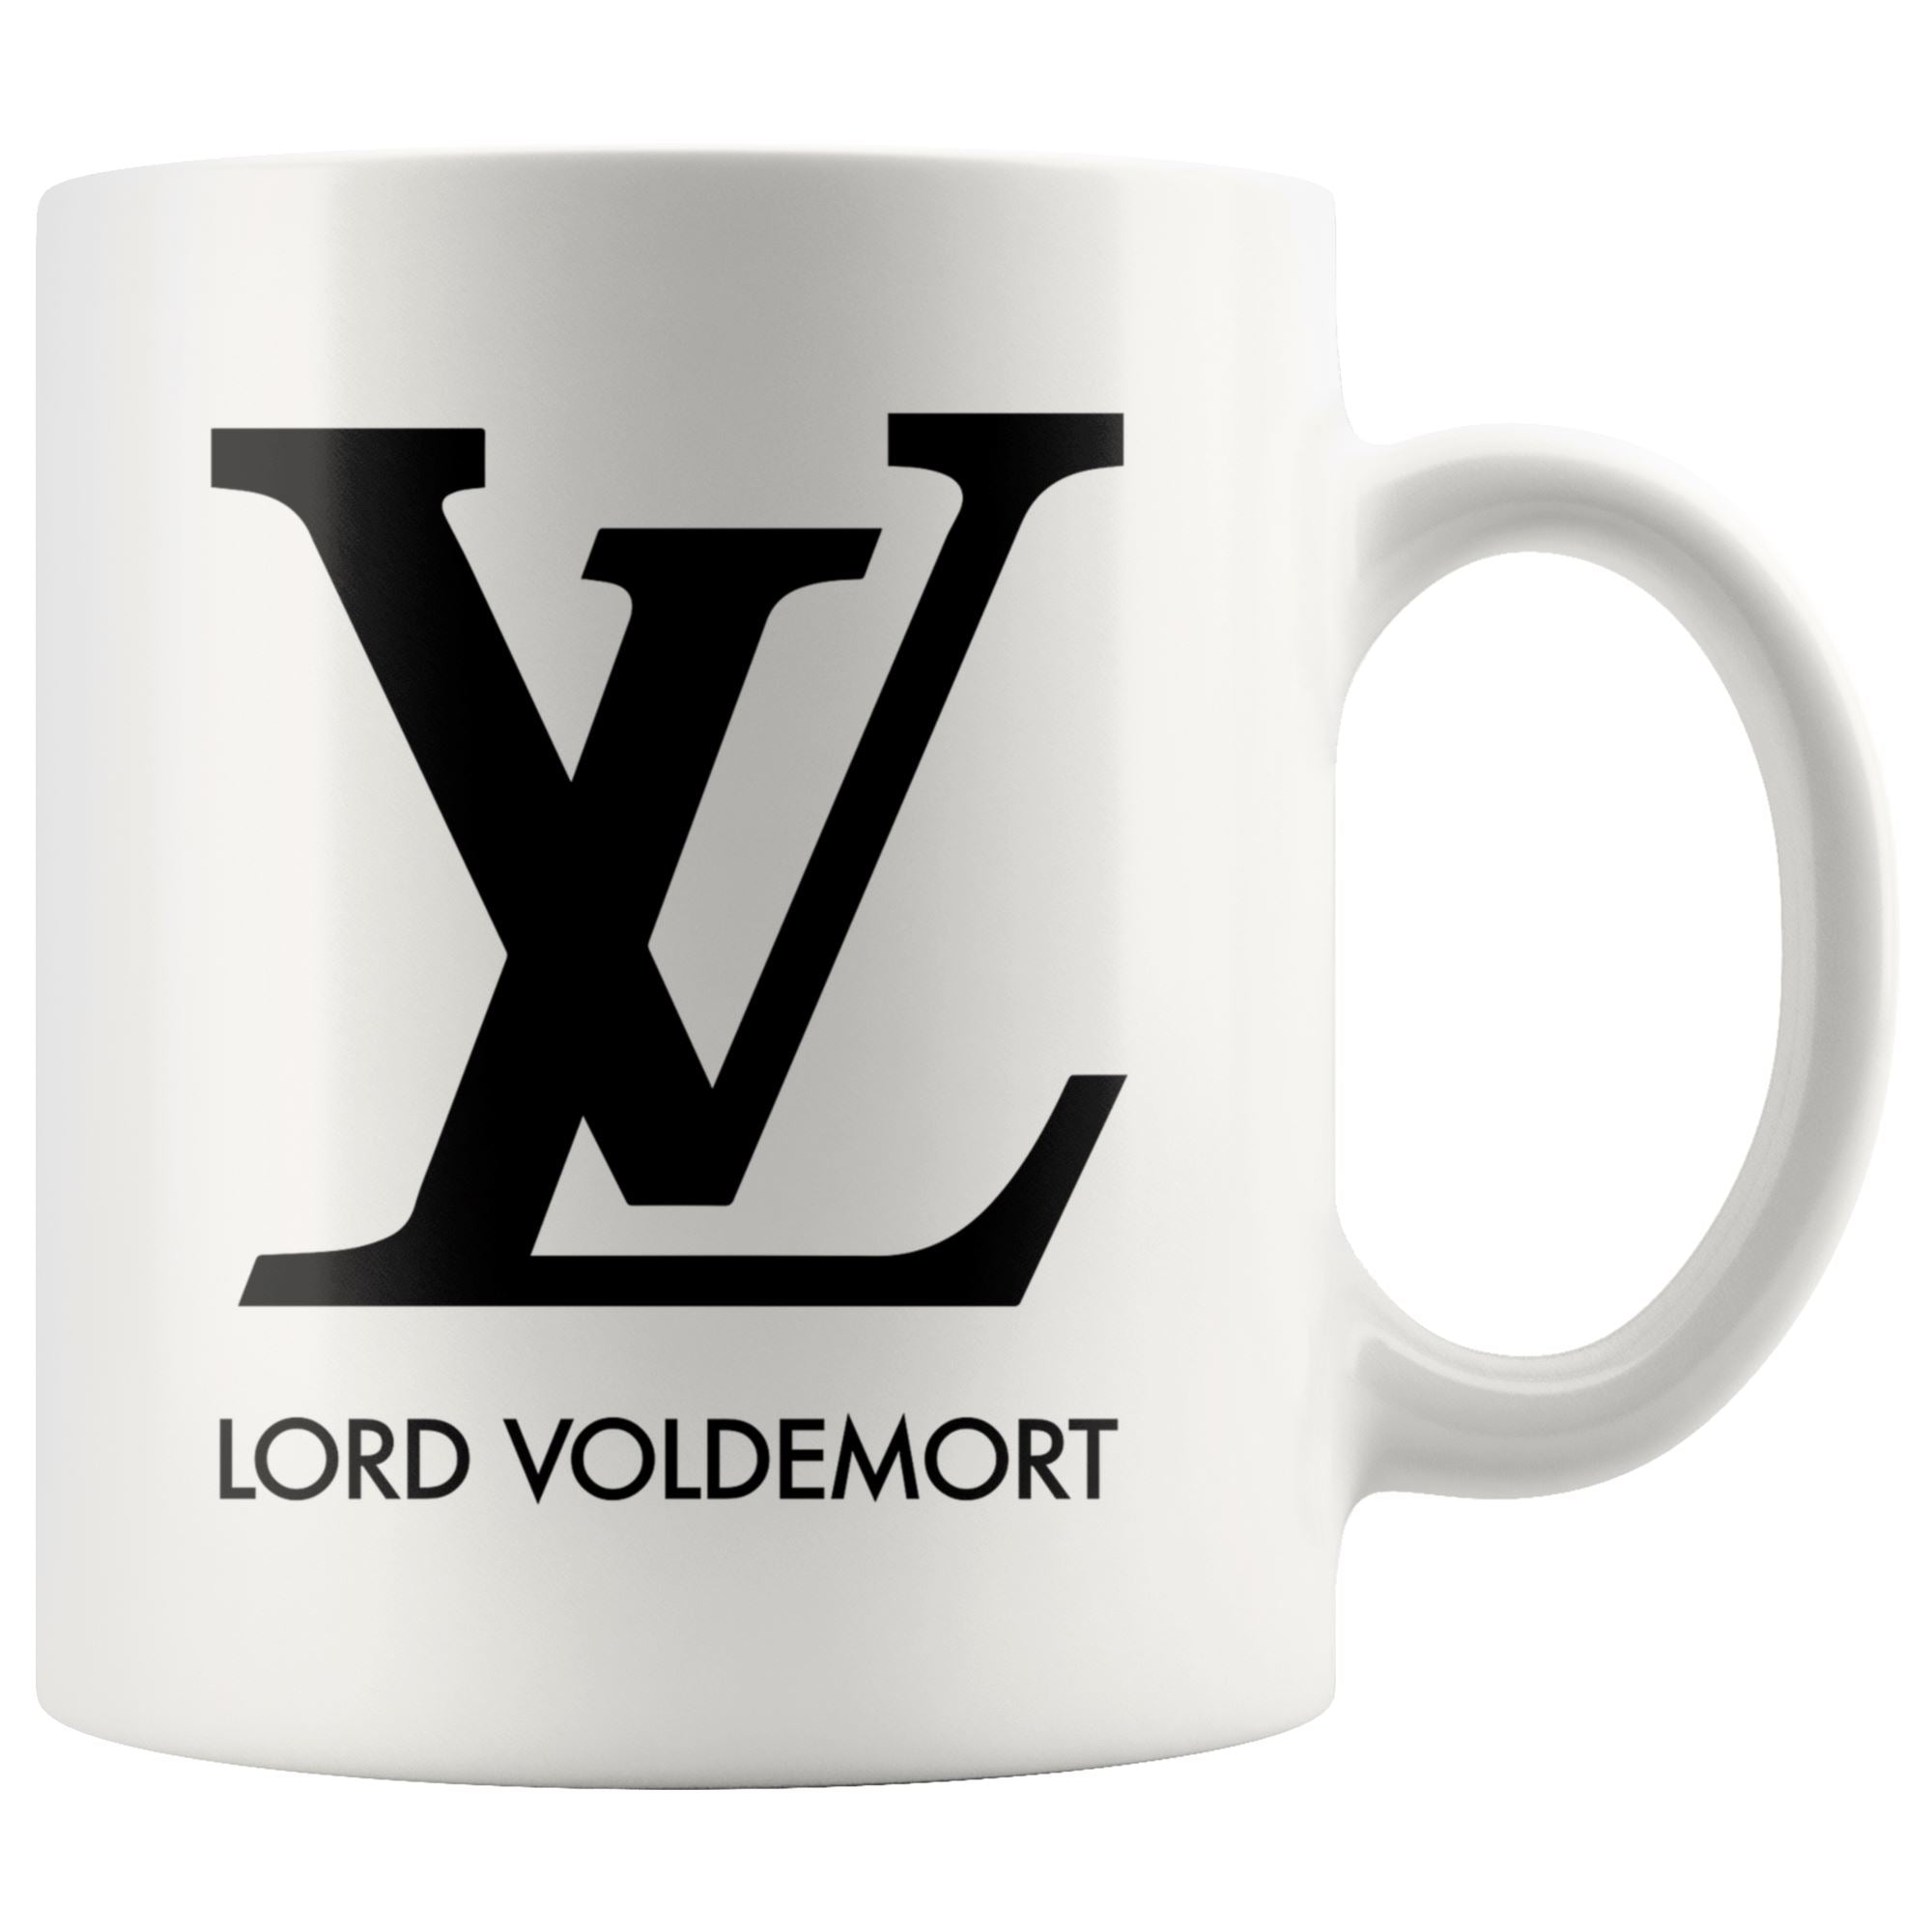 Lord Voldemort Mug Drinkware teelaunch 11oz Mug 